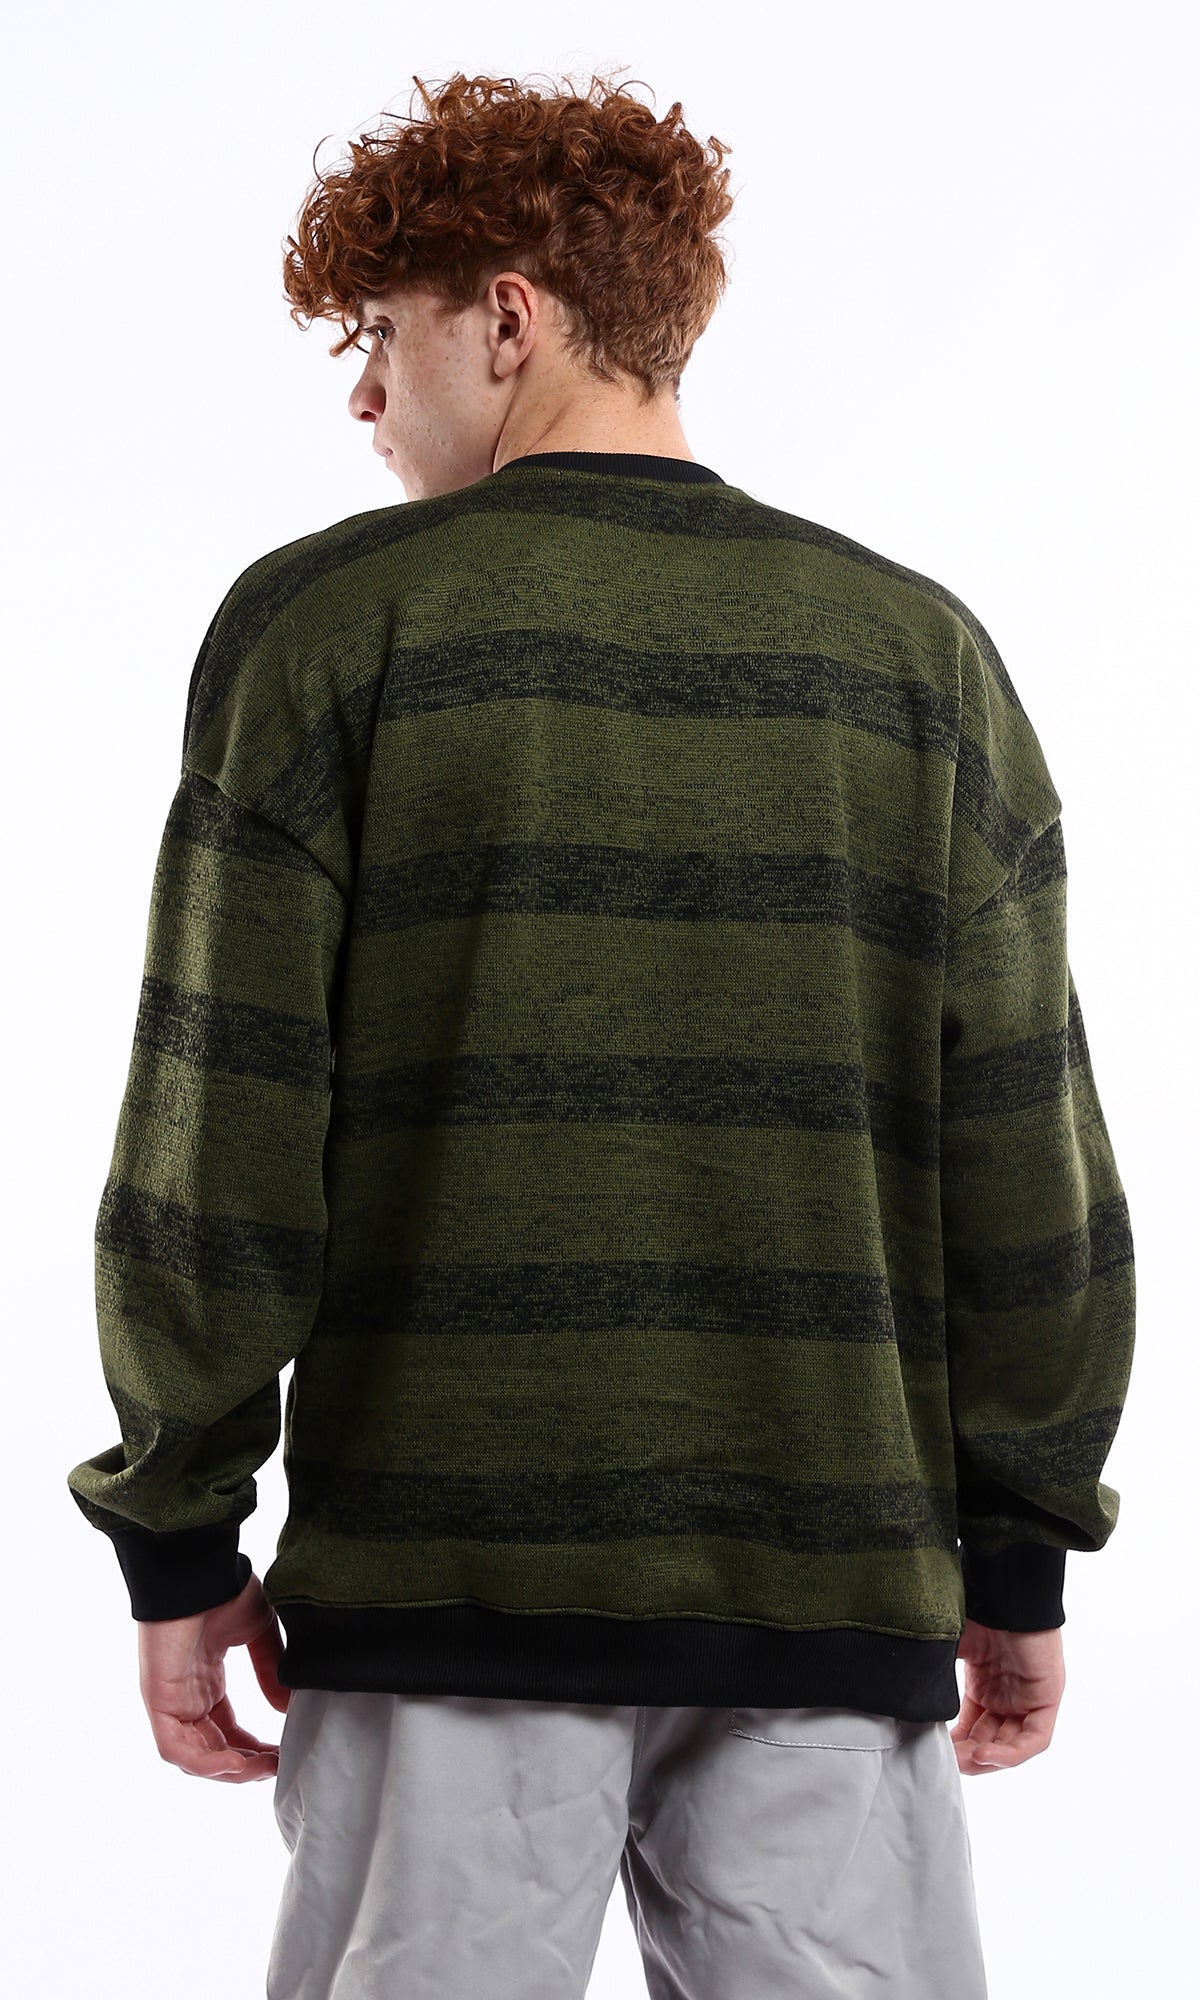 O178413 Striped Black & Olive Coziness Slip On Sweatshirt